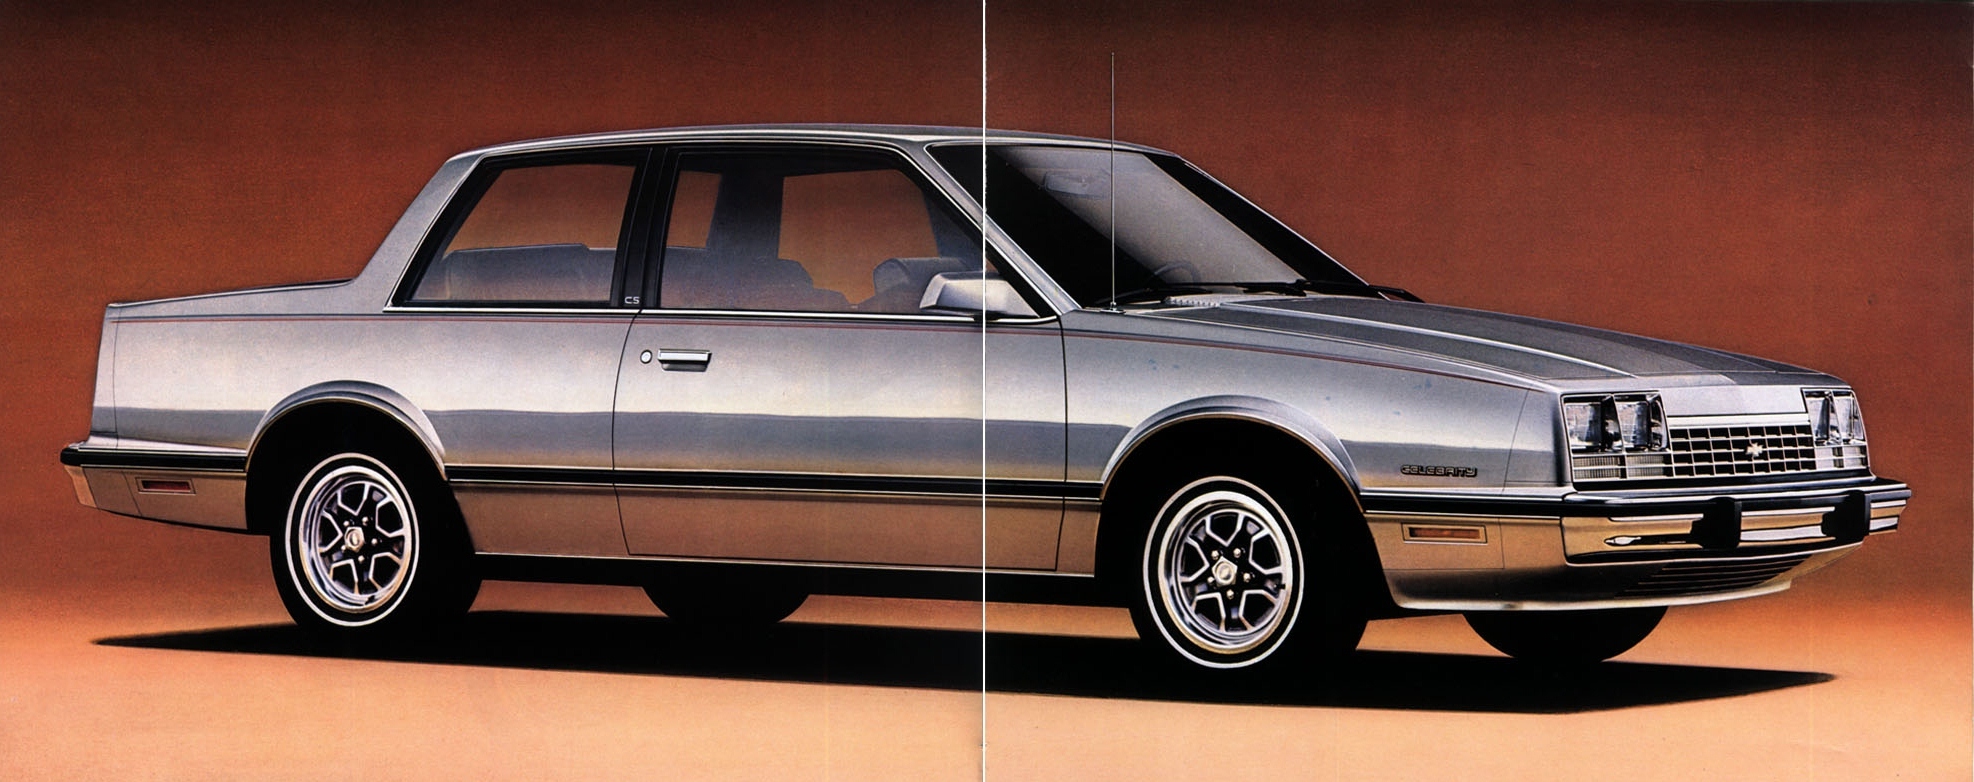 Chevrolet Celebrity 1988 #2